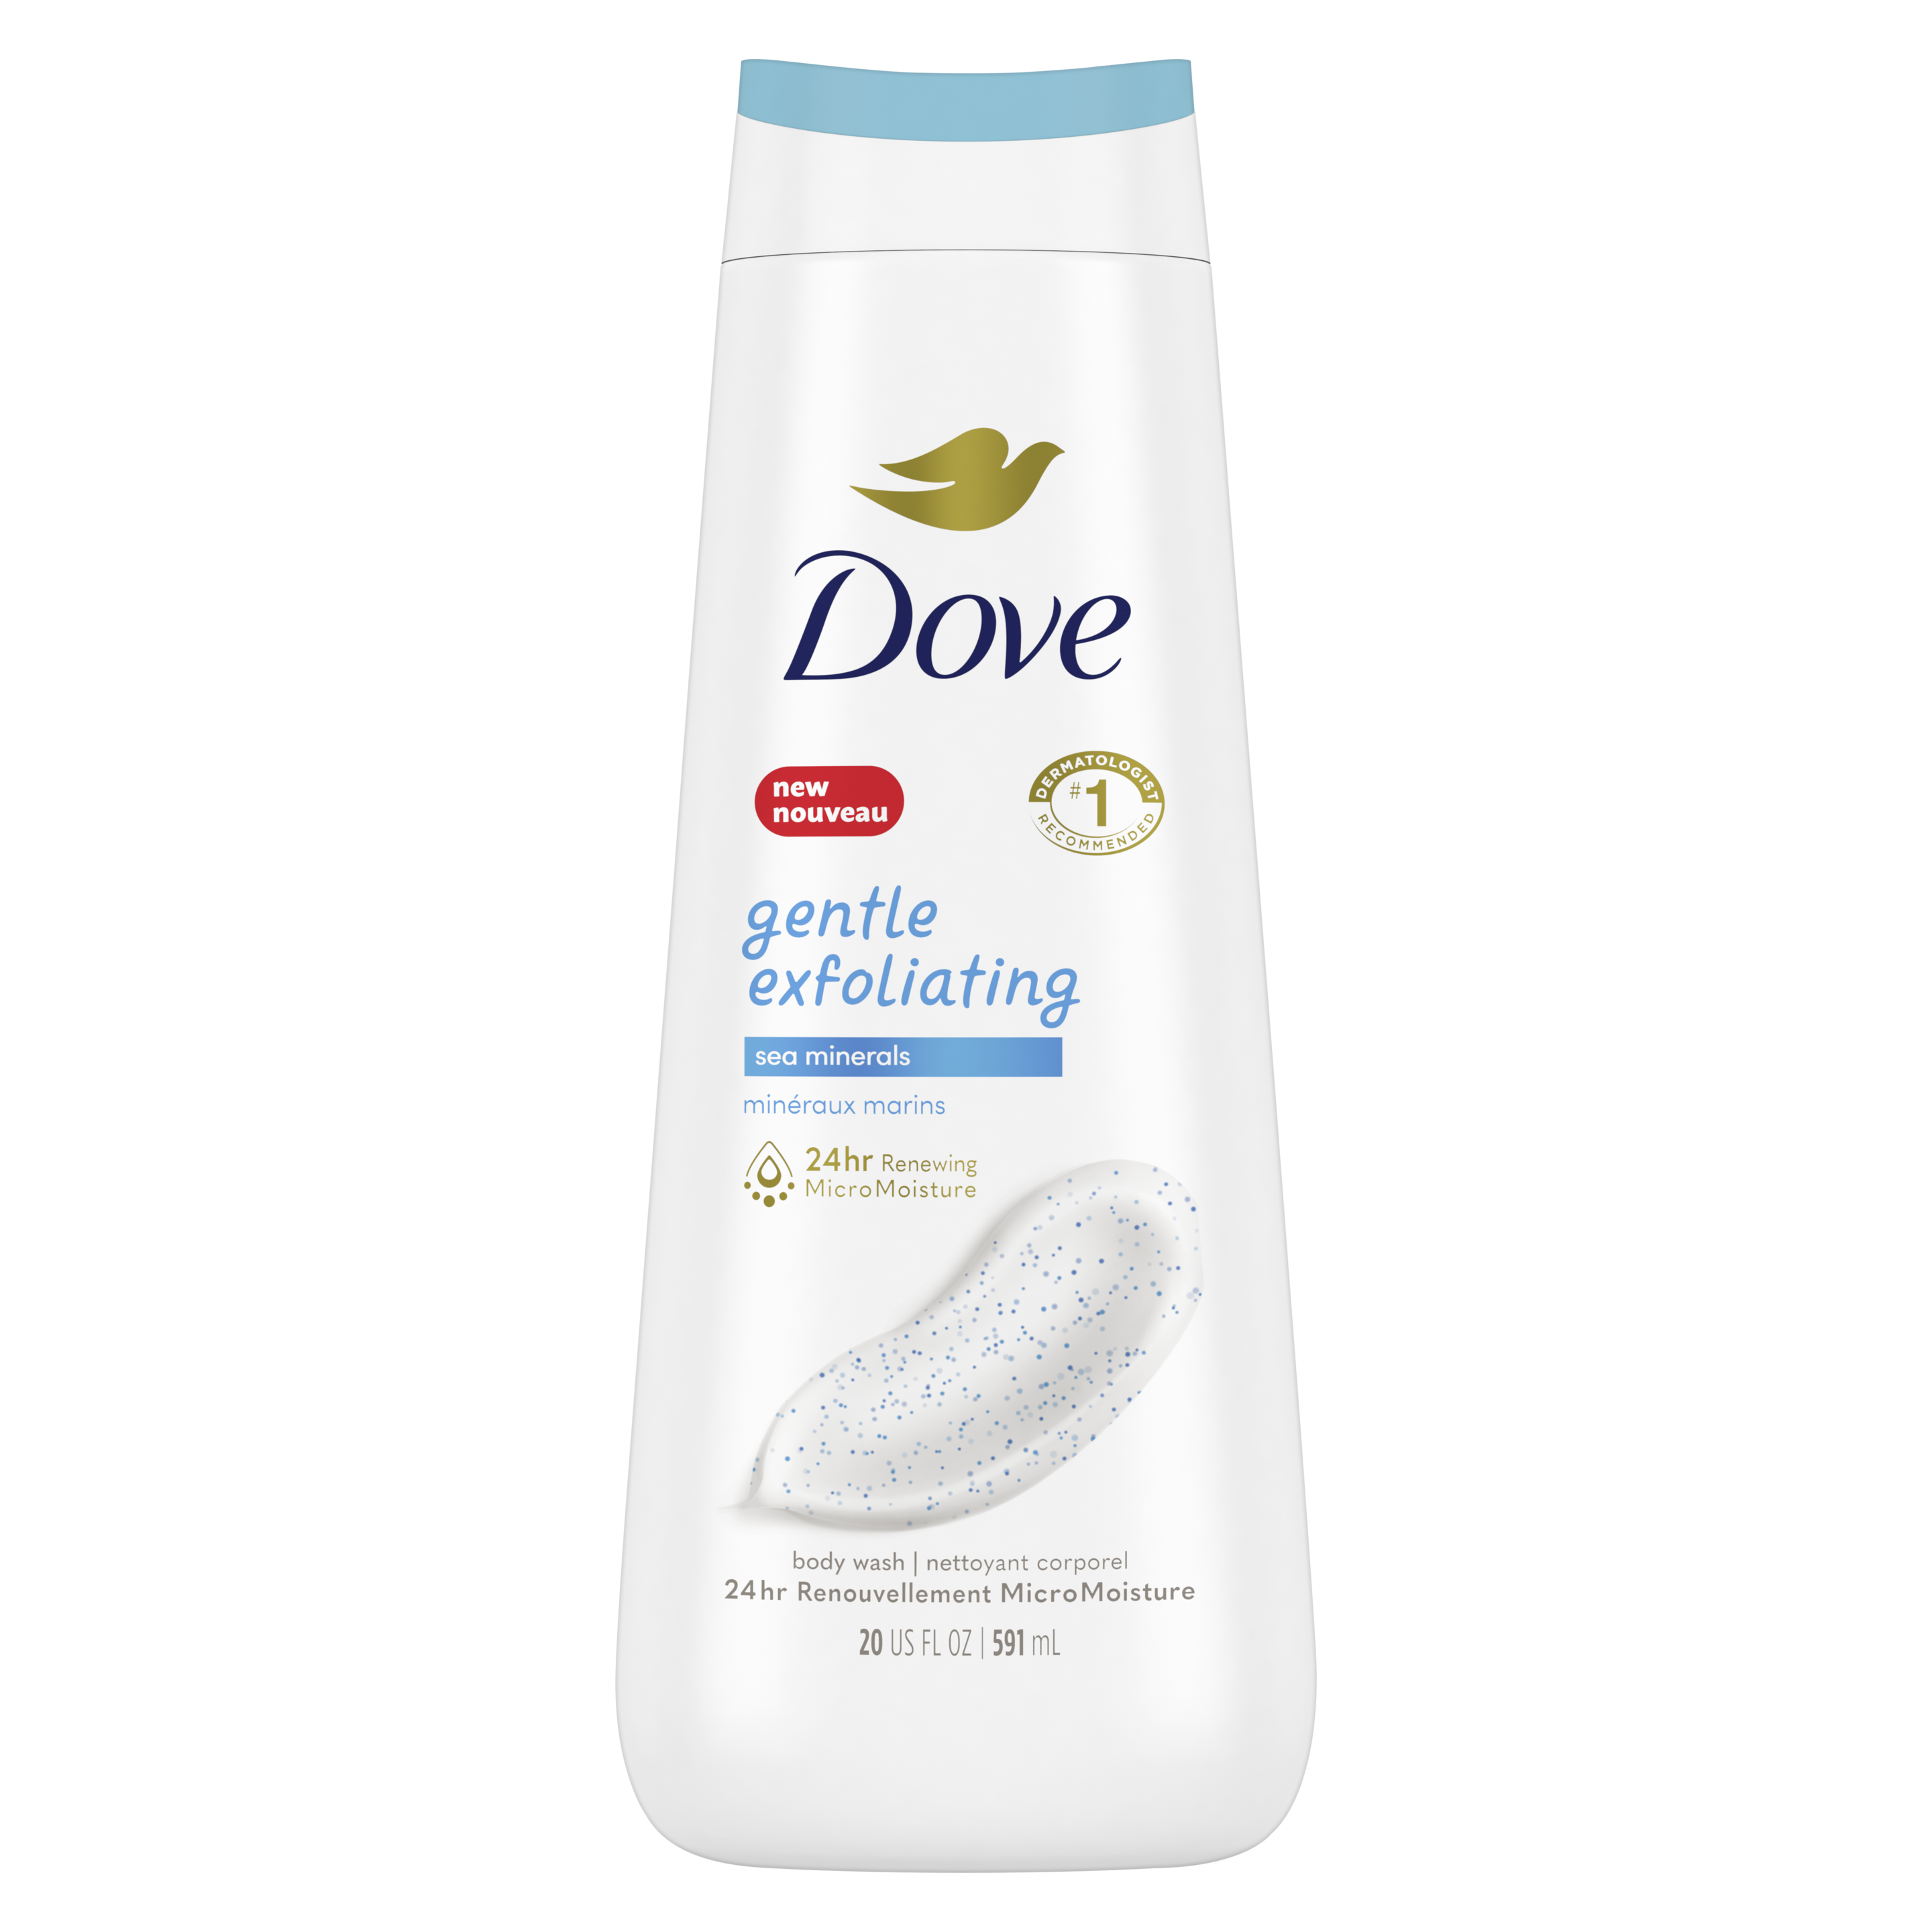 Dove Gentle Exfoliating Body Wash with Sea Minerals